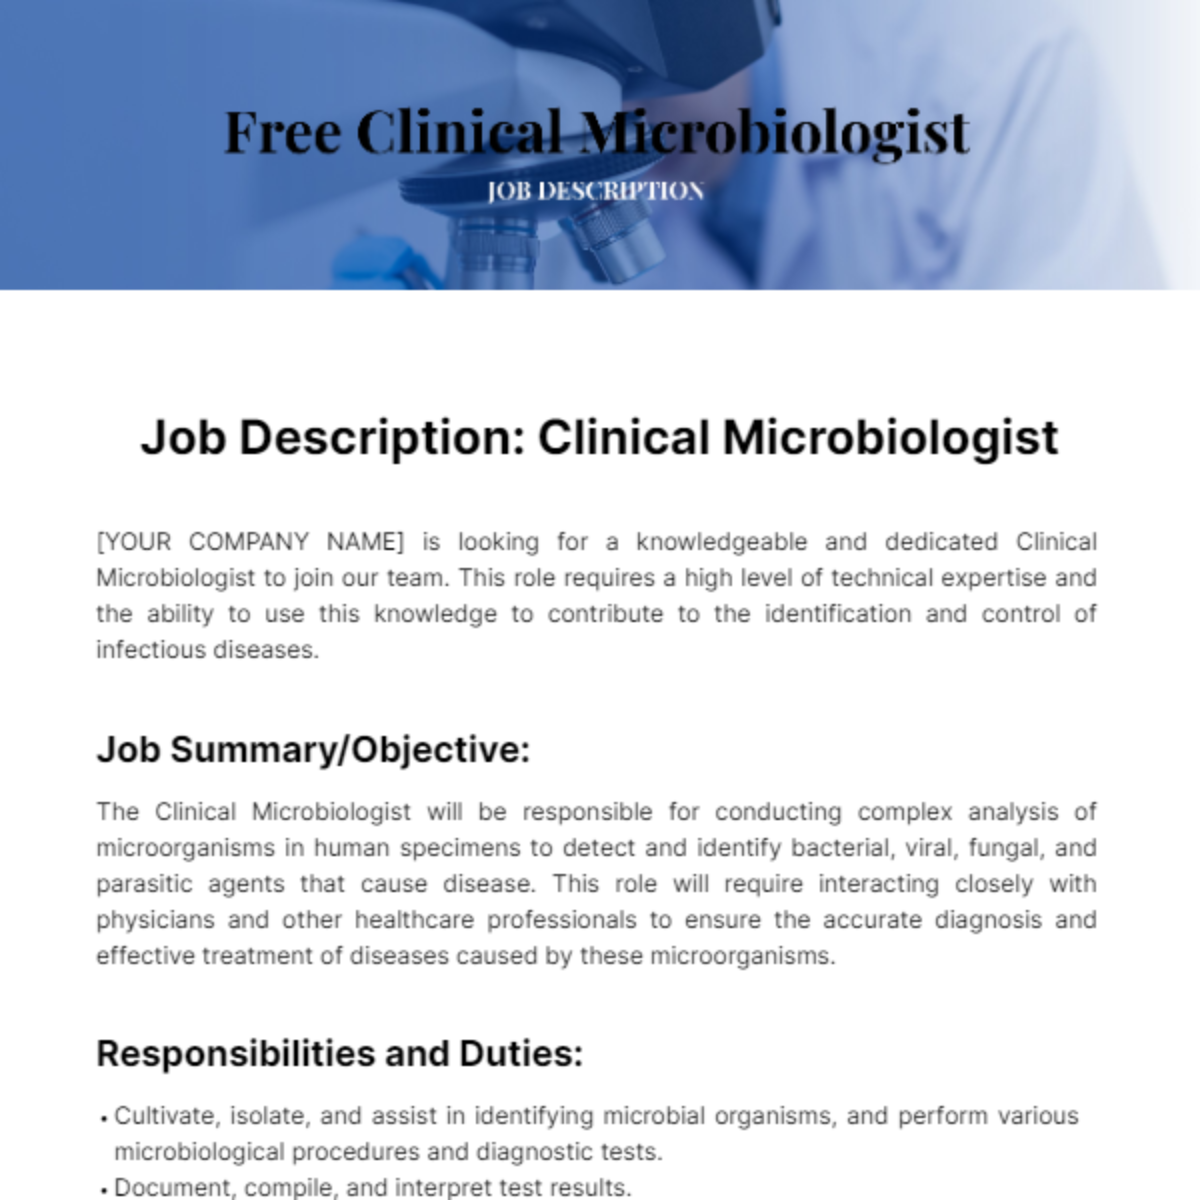 Free Clinical Microbiologist Job Description Template